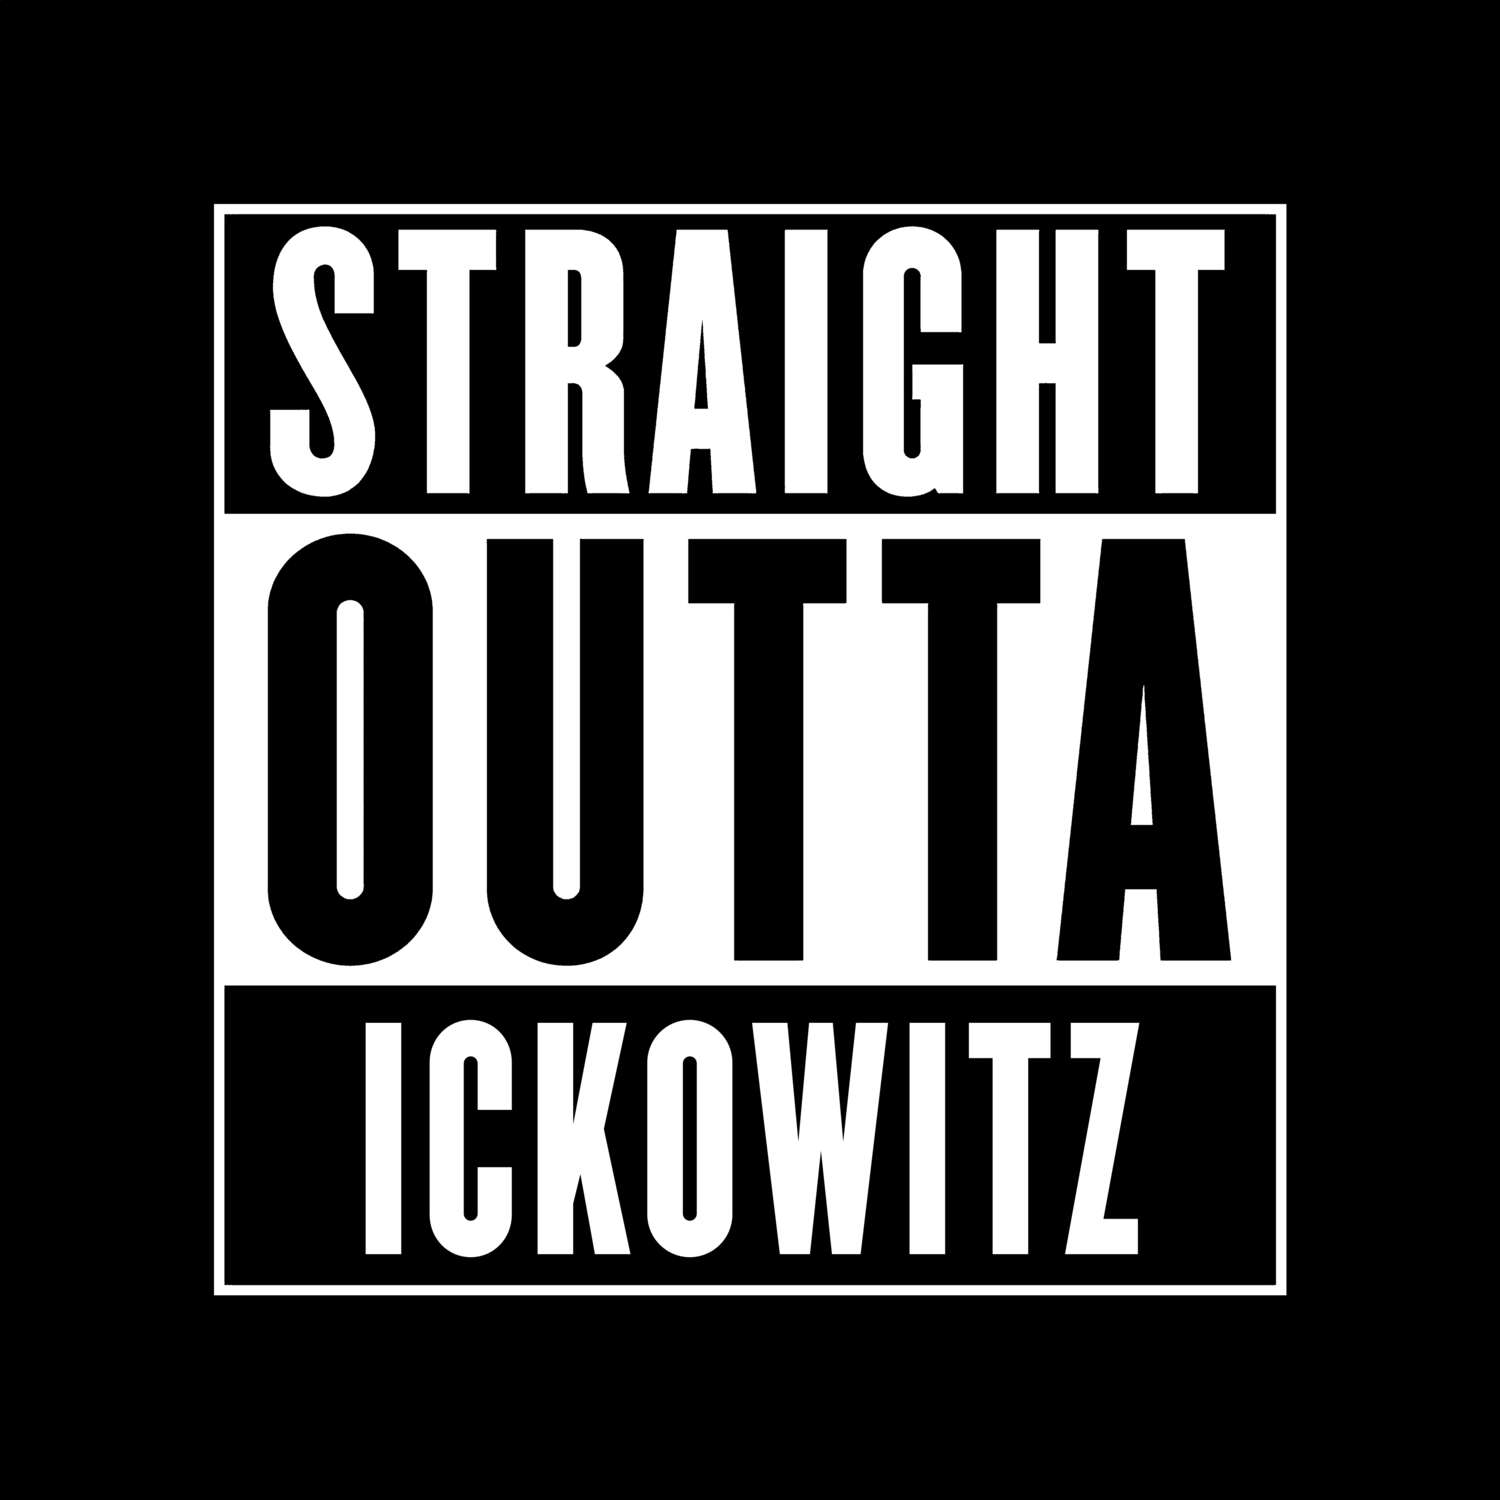 Ickowitz T-Shirt »Straight Outta«